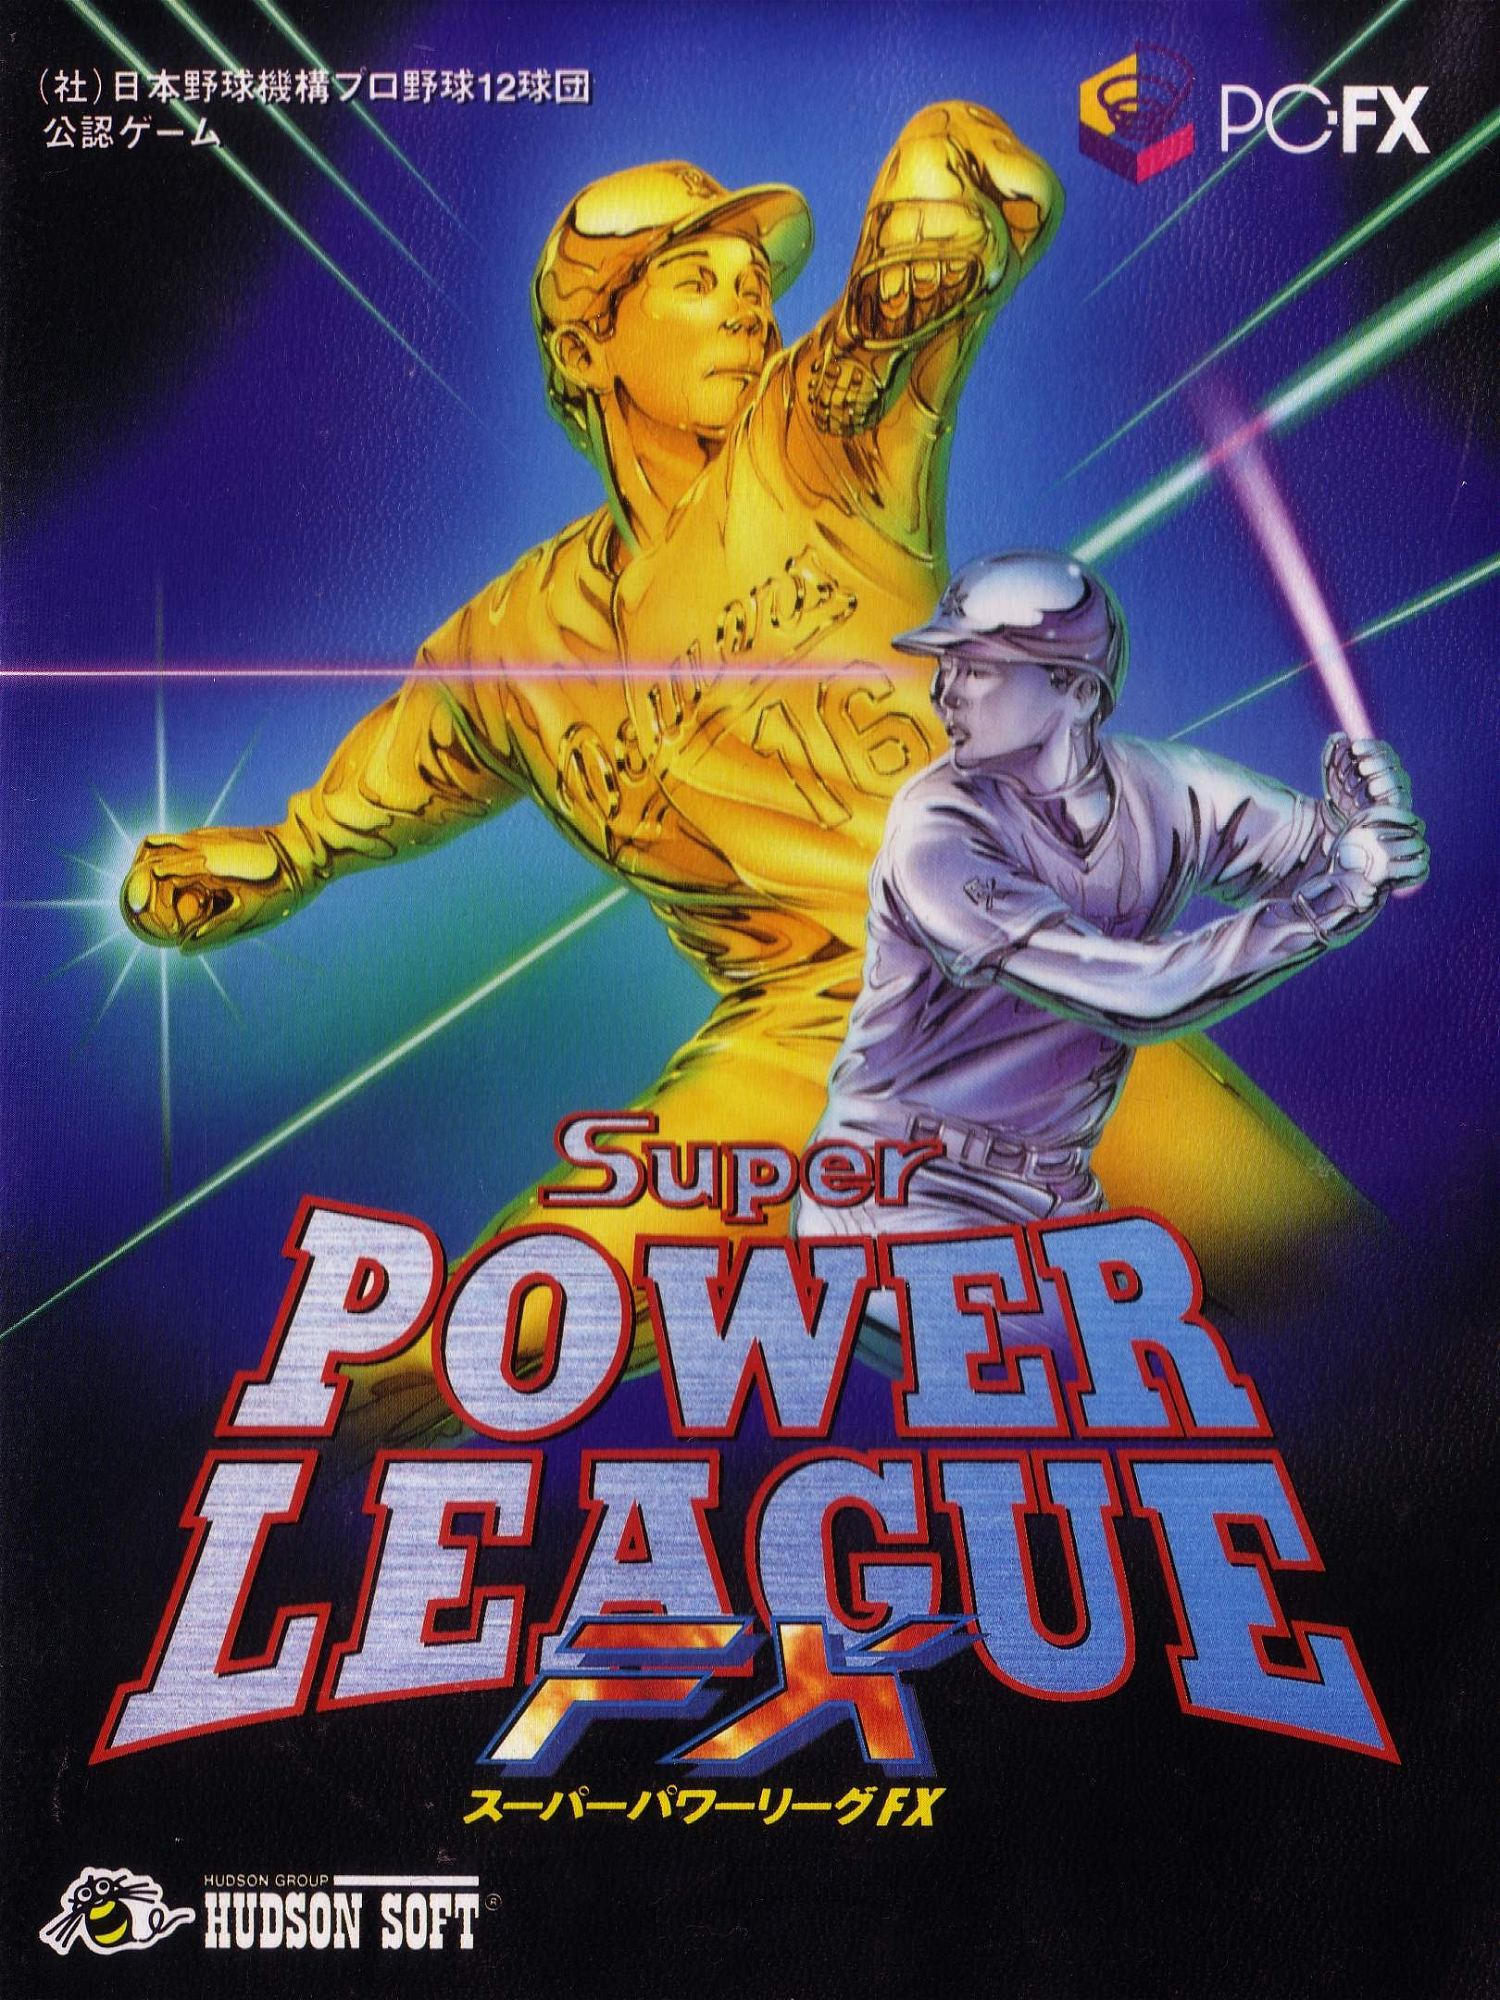 Super Power. PC-FX (PCFX) games. Super powerful. Super Power PC game Club. Супер пауэр